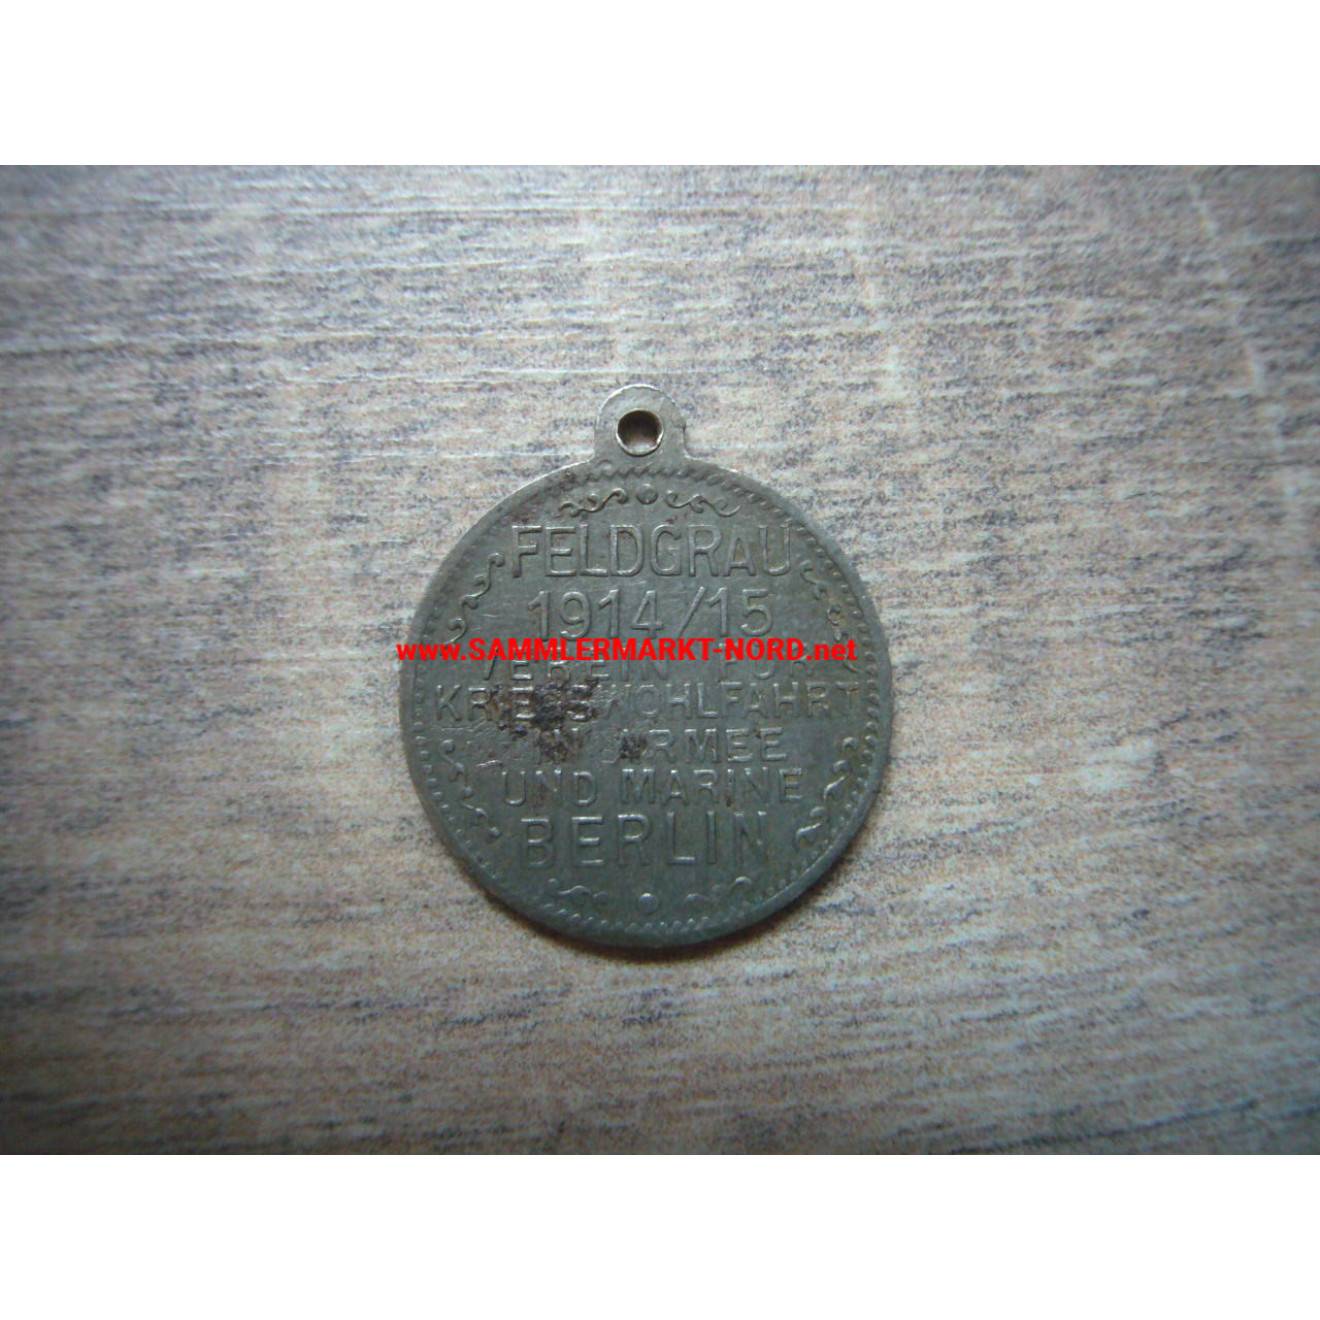 Feldgrau 1914/15 Association for War Welfare - Medal